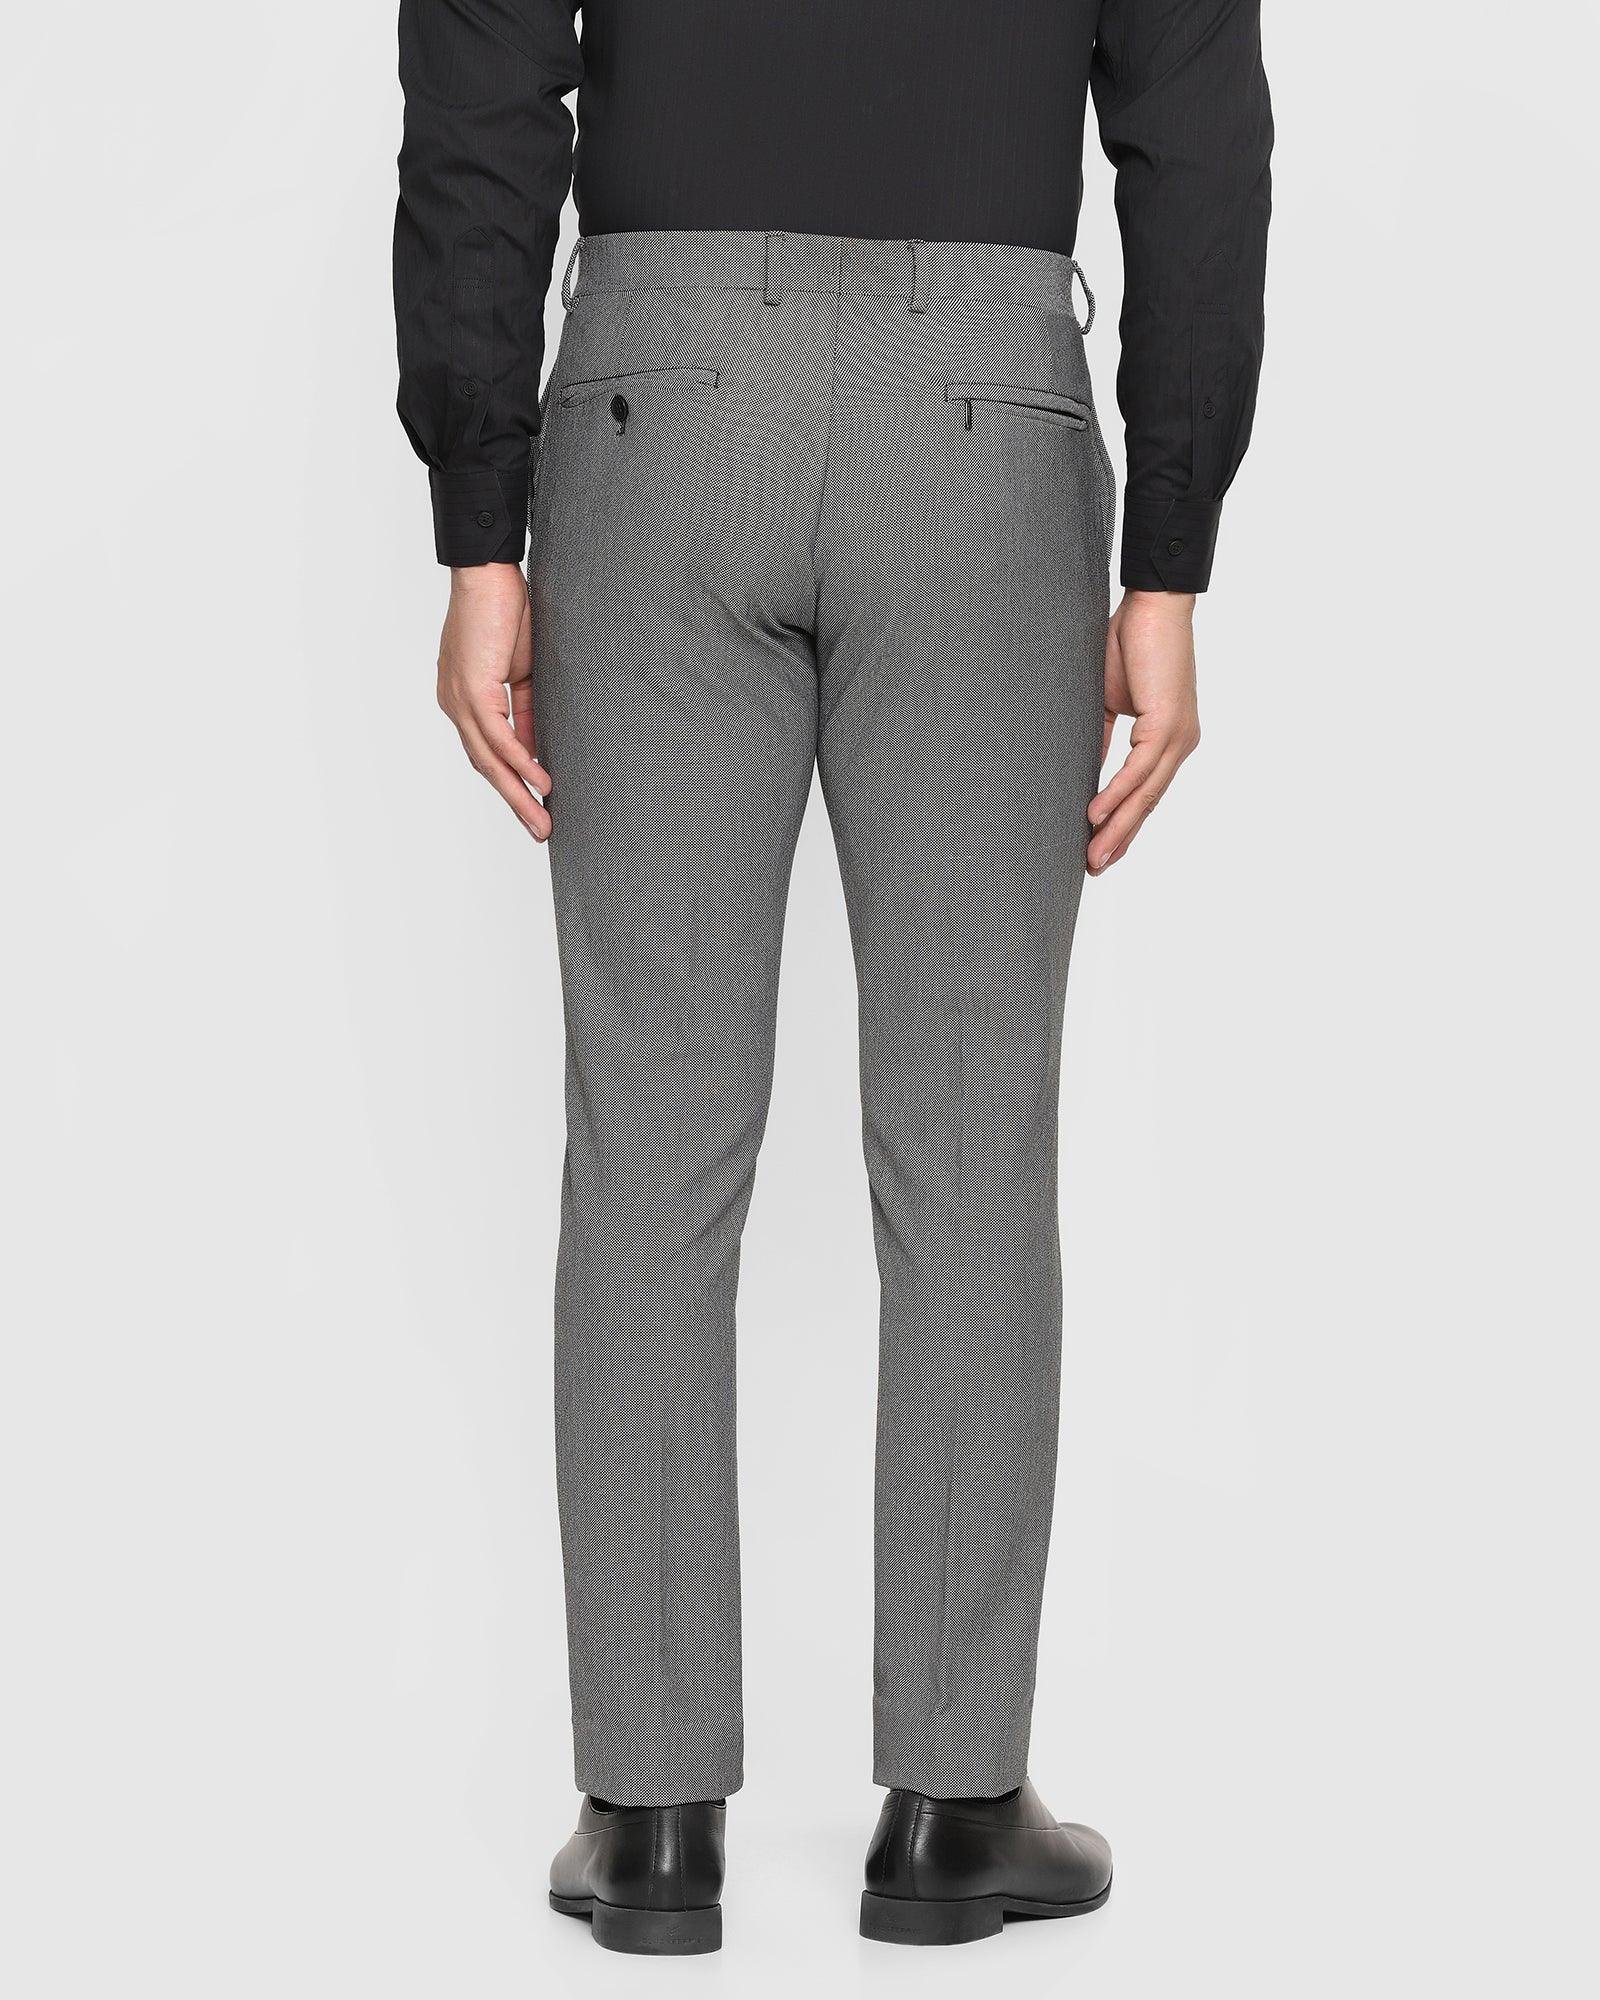 Buy BLACKBERRYS URBAN Grey Mens 4 Pocket Stripes Trousers  Shoppers Stop